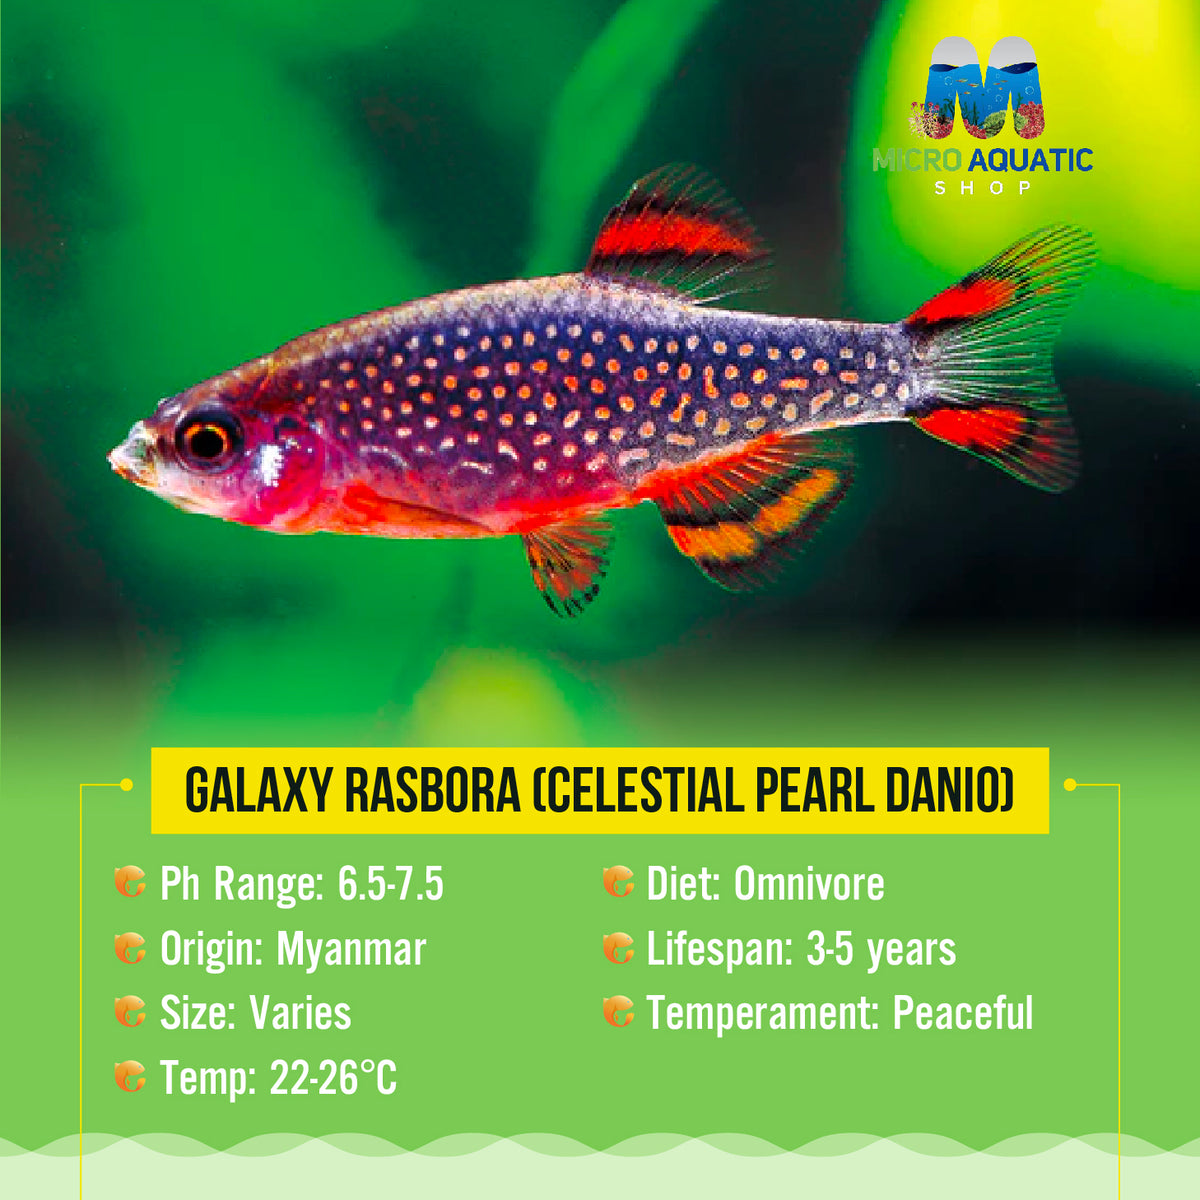 Galaxy Rasbora (Celestial Pearl Danio)